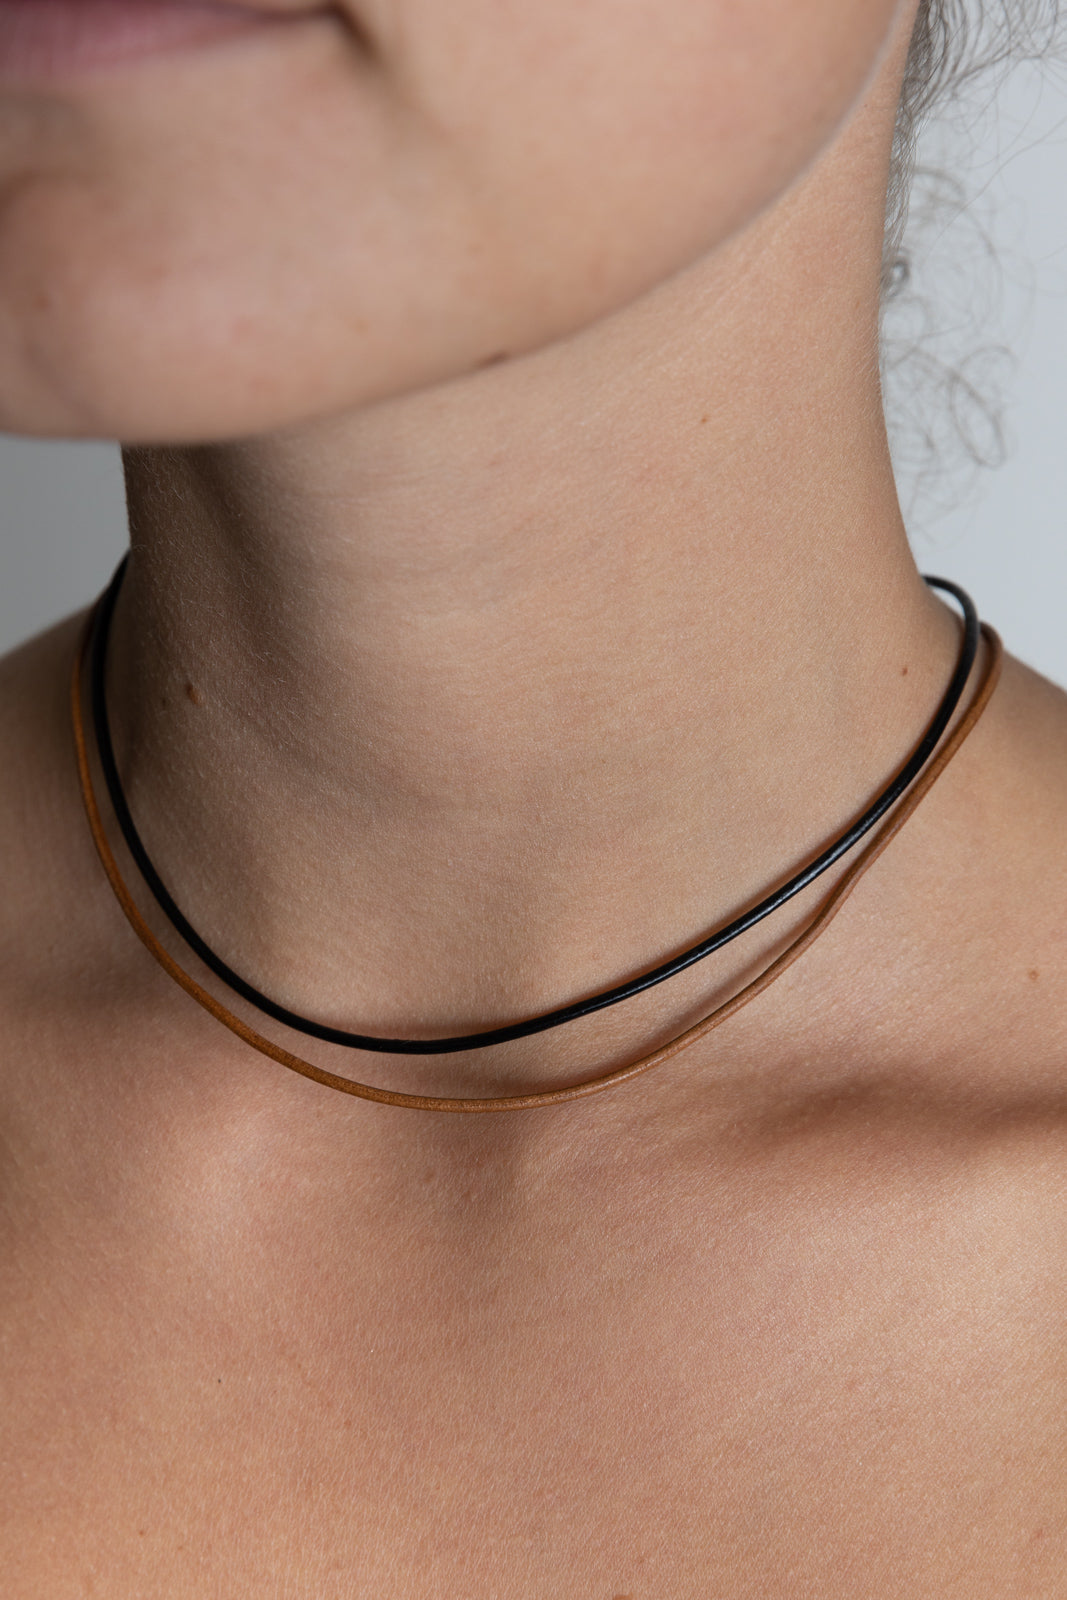 James Avery Braided Black Leather Necklace | Dillard's